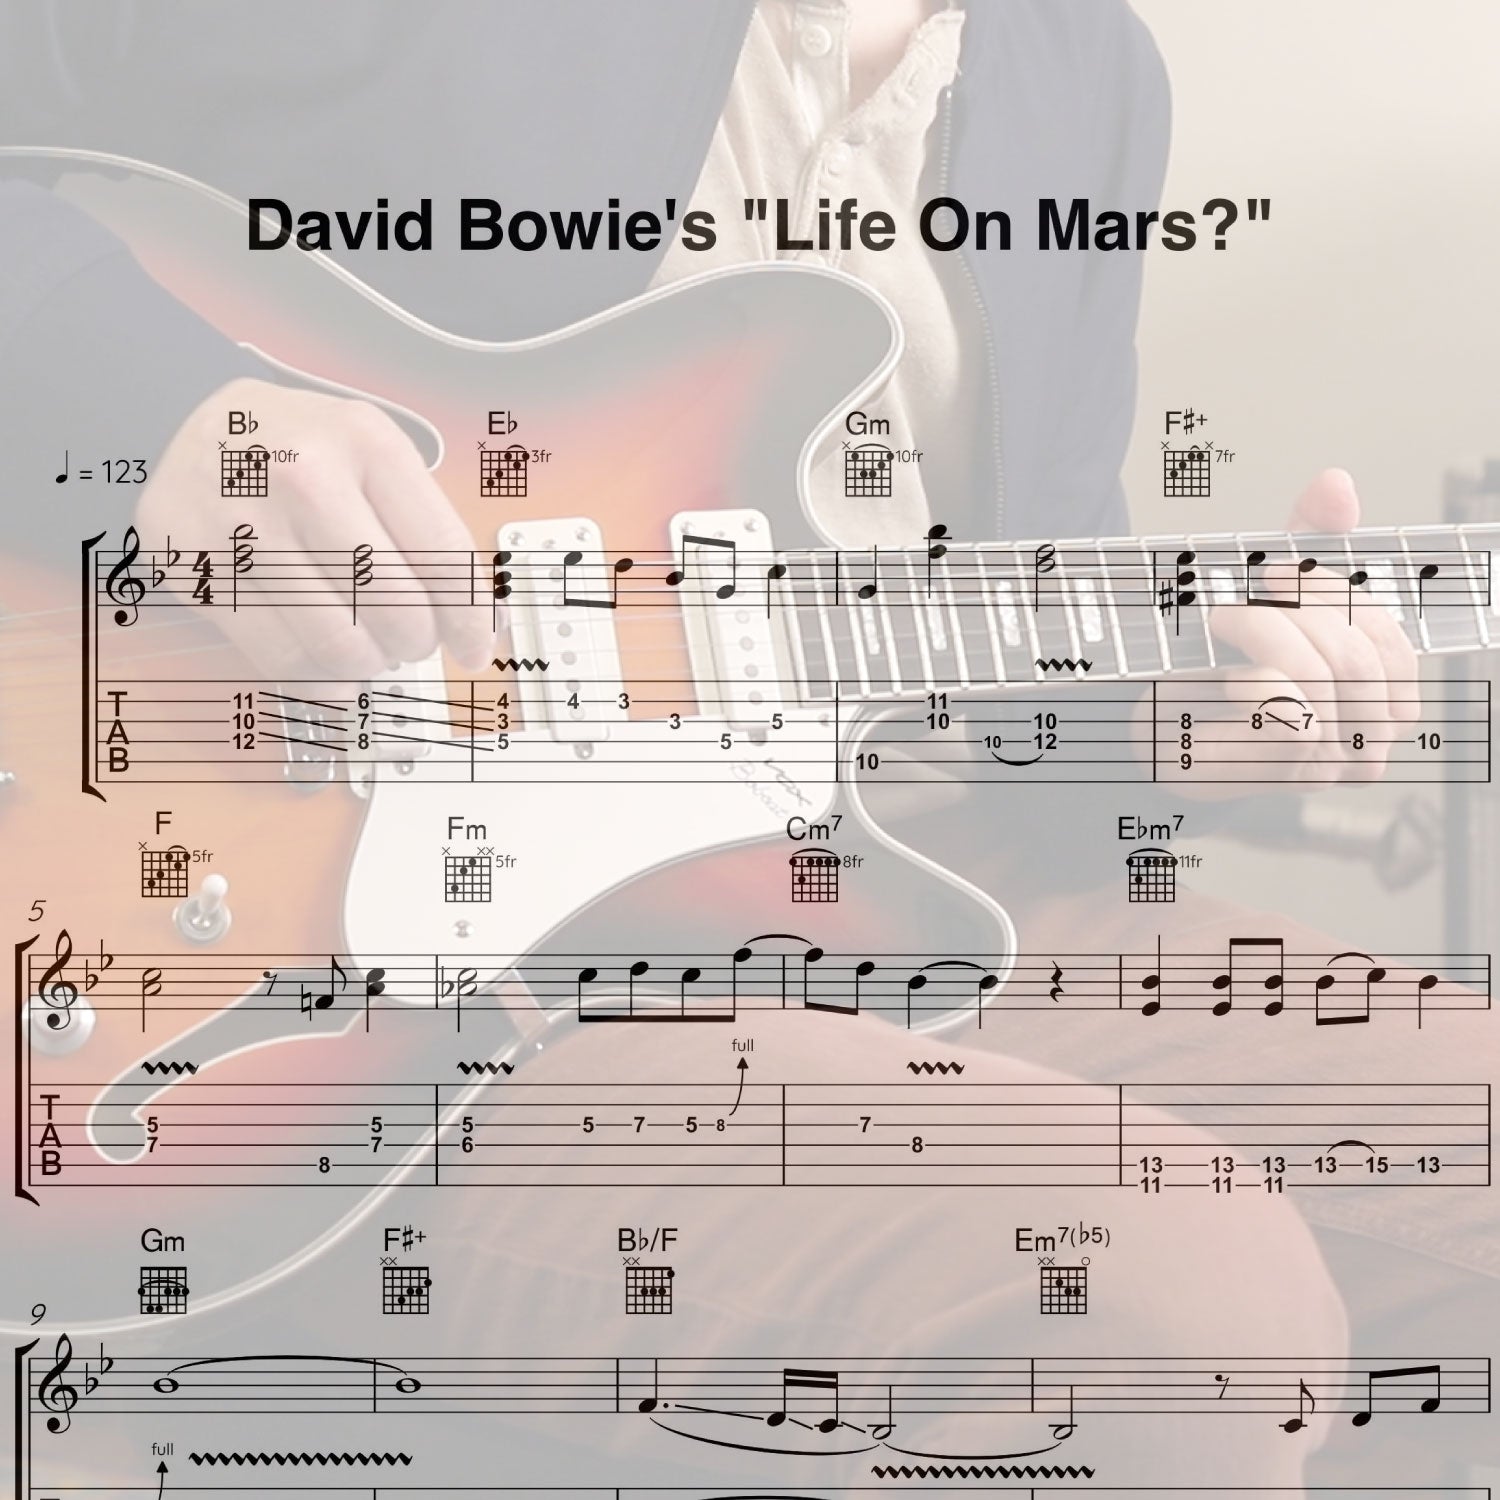 David Bowie's "Life On Mars?"